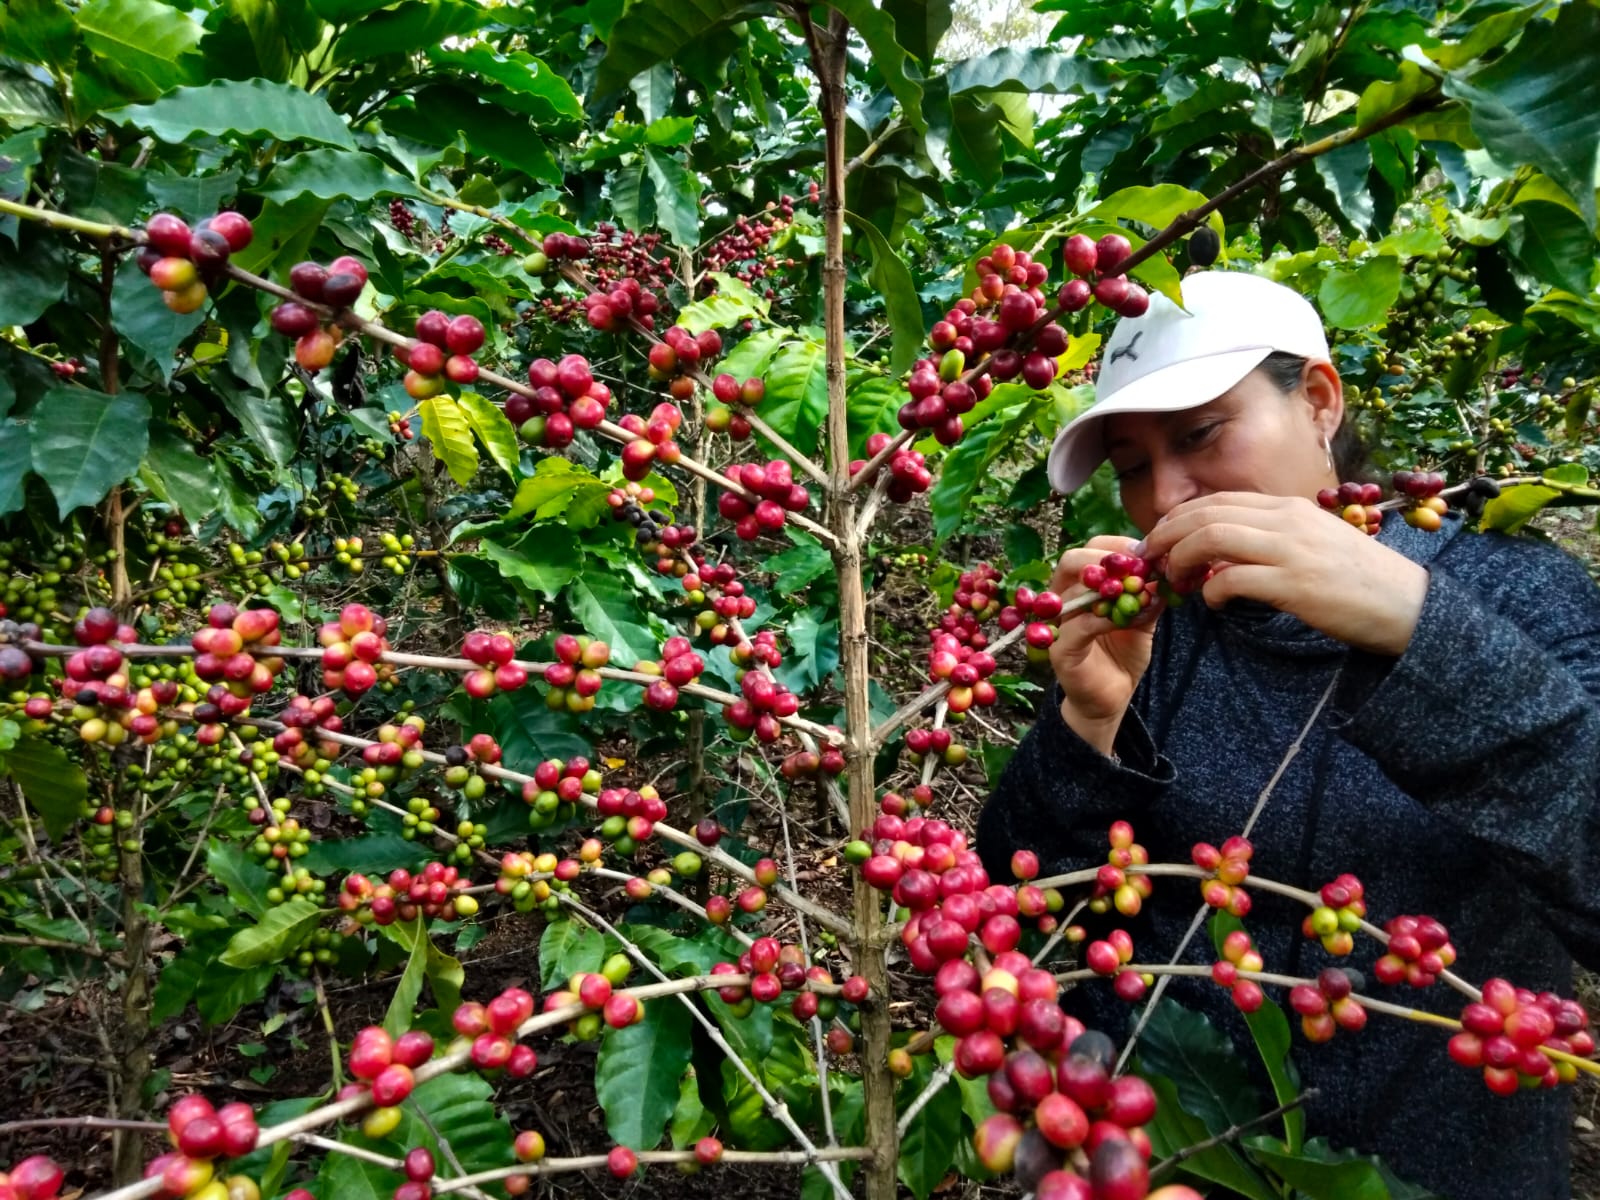 coffee tree with ripe cherries in Peru